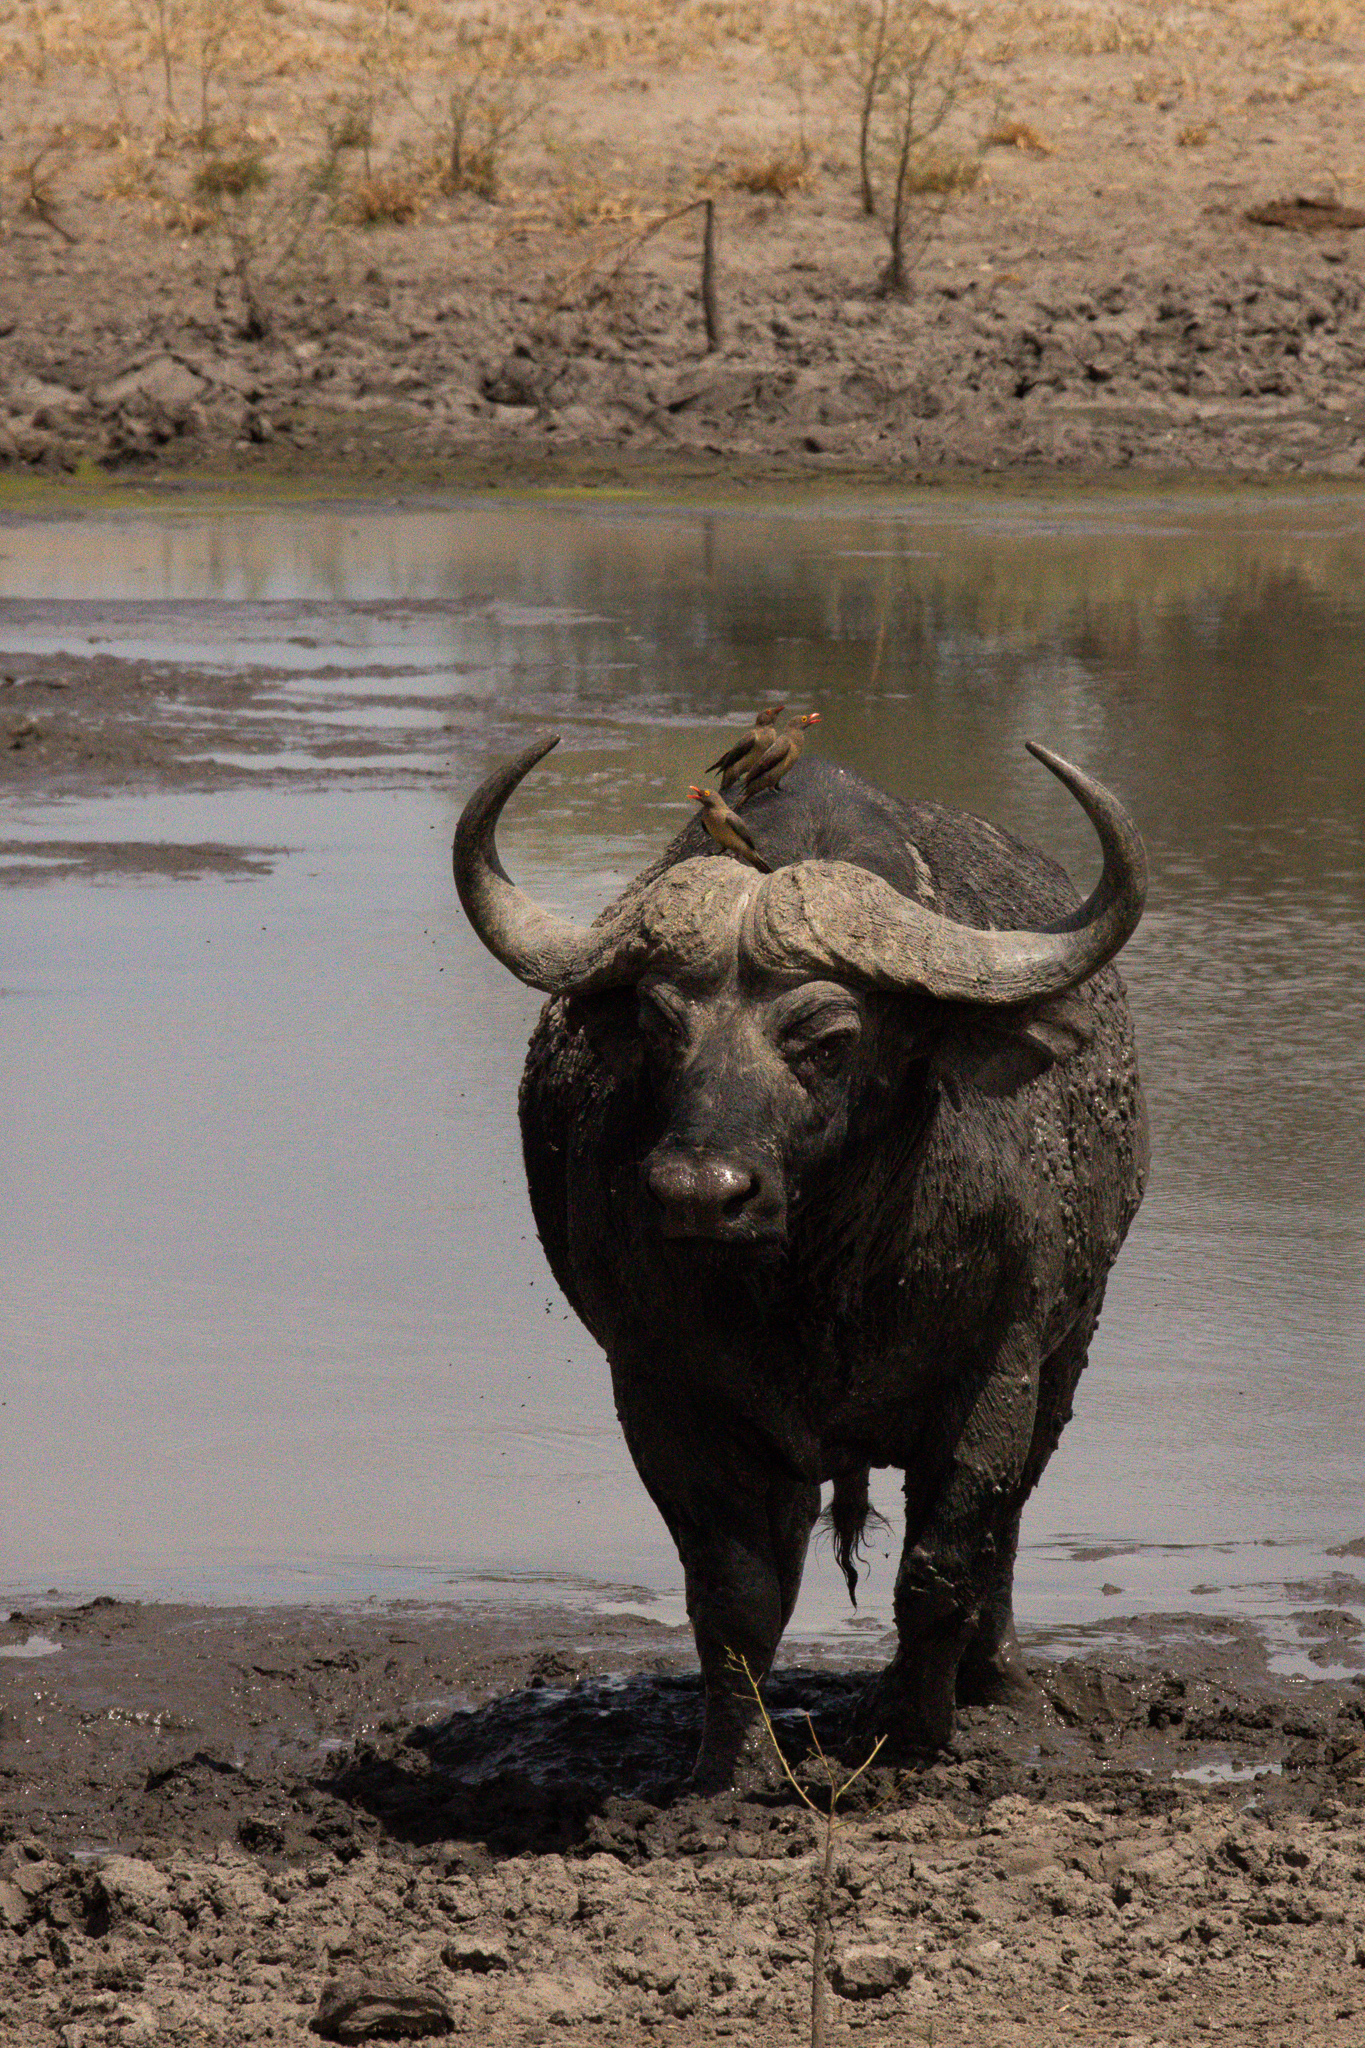 A water buffalo with a bird sitting on its head seen on a Tanzania safari